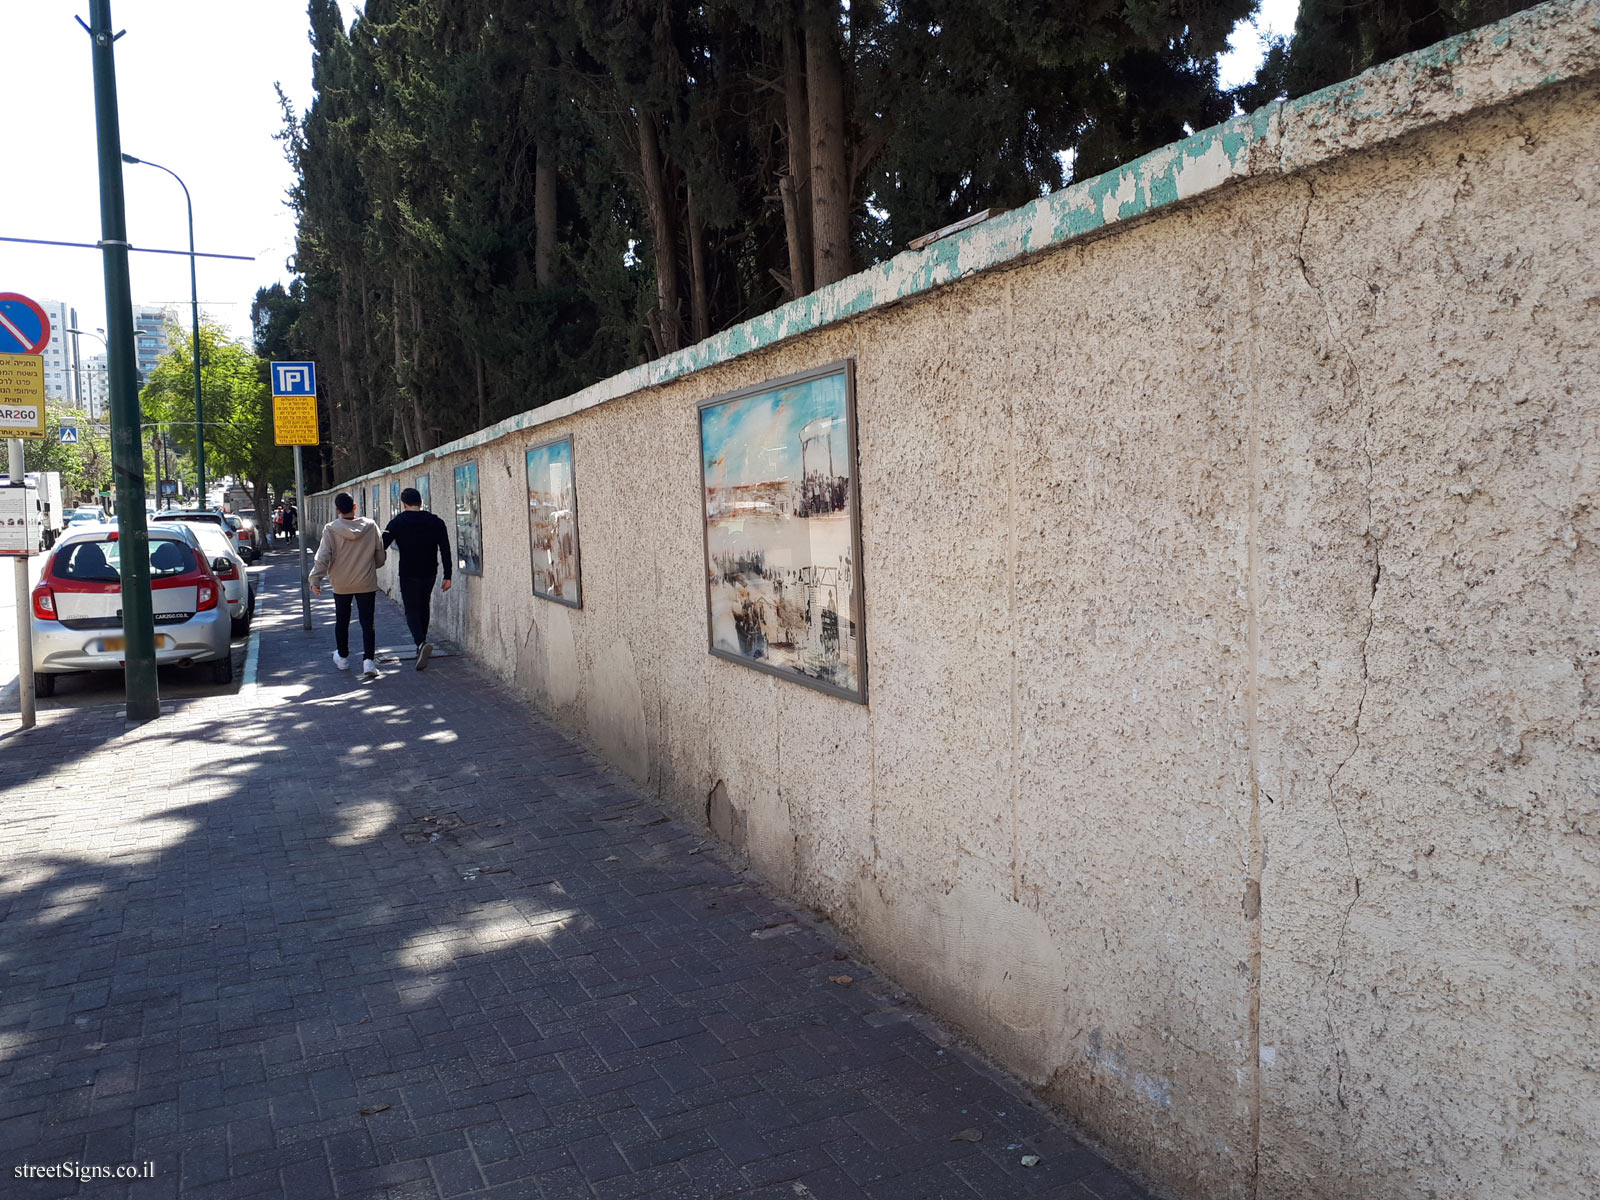 The wall of art - "Between Two Hills" - Weizman St 26, Giv’atayim, Israel